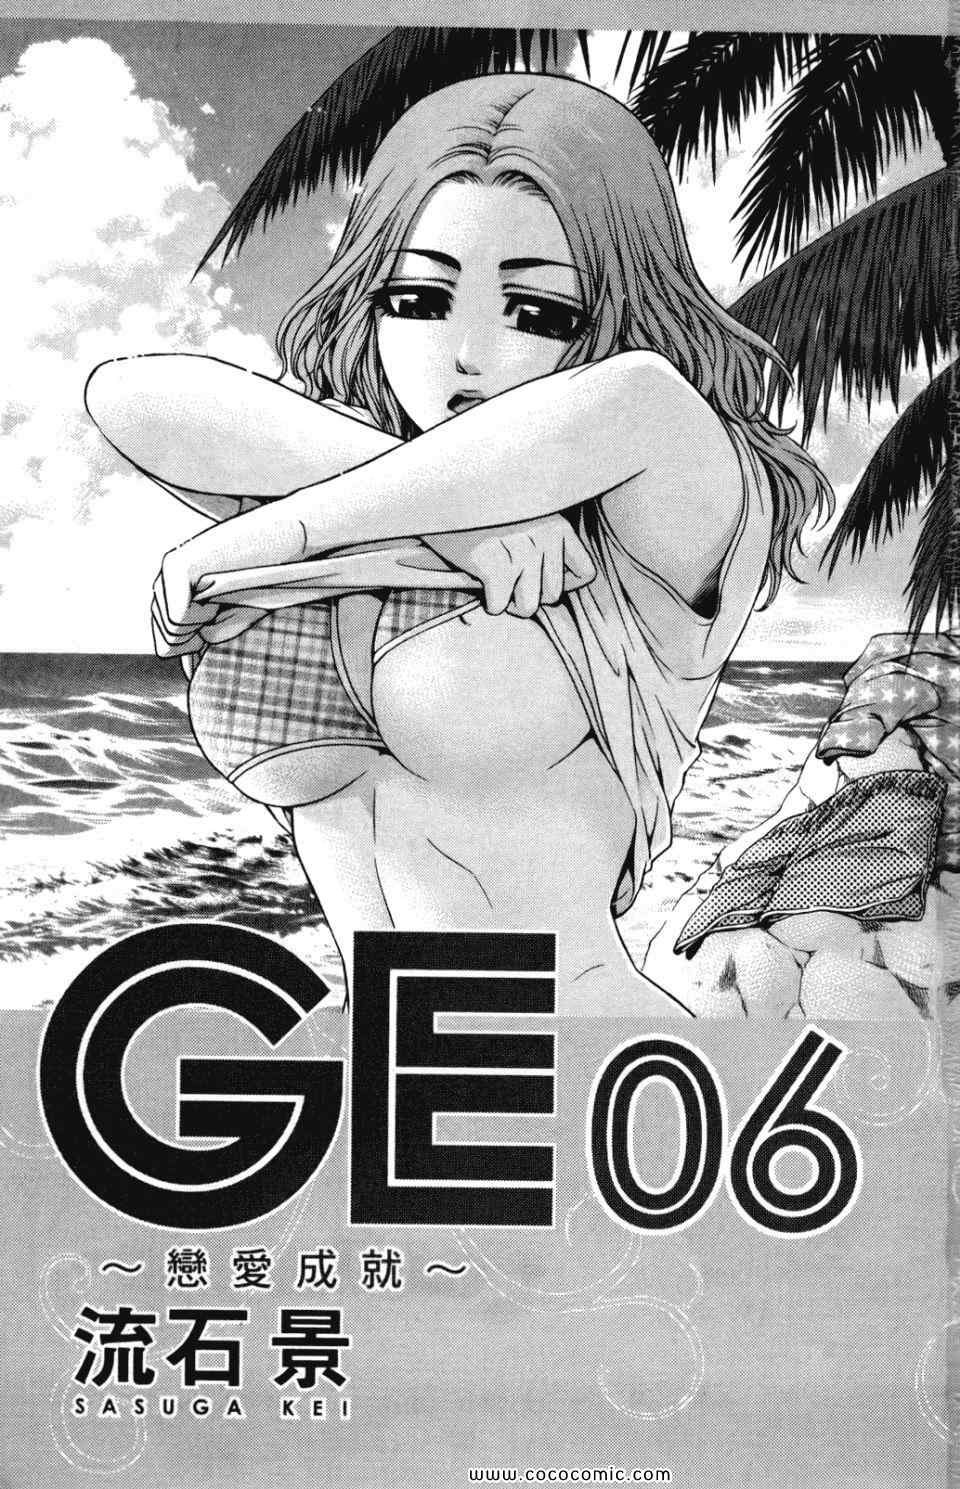 《GE good ending》漫画 ge06卷